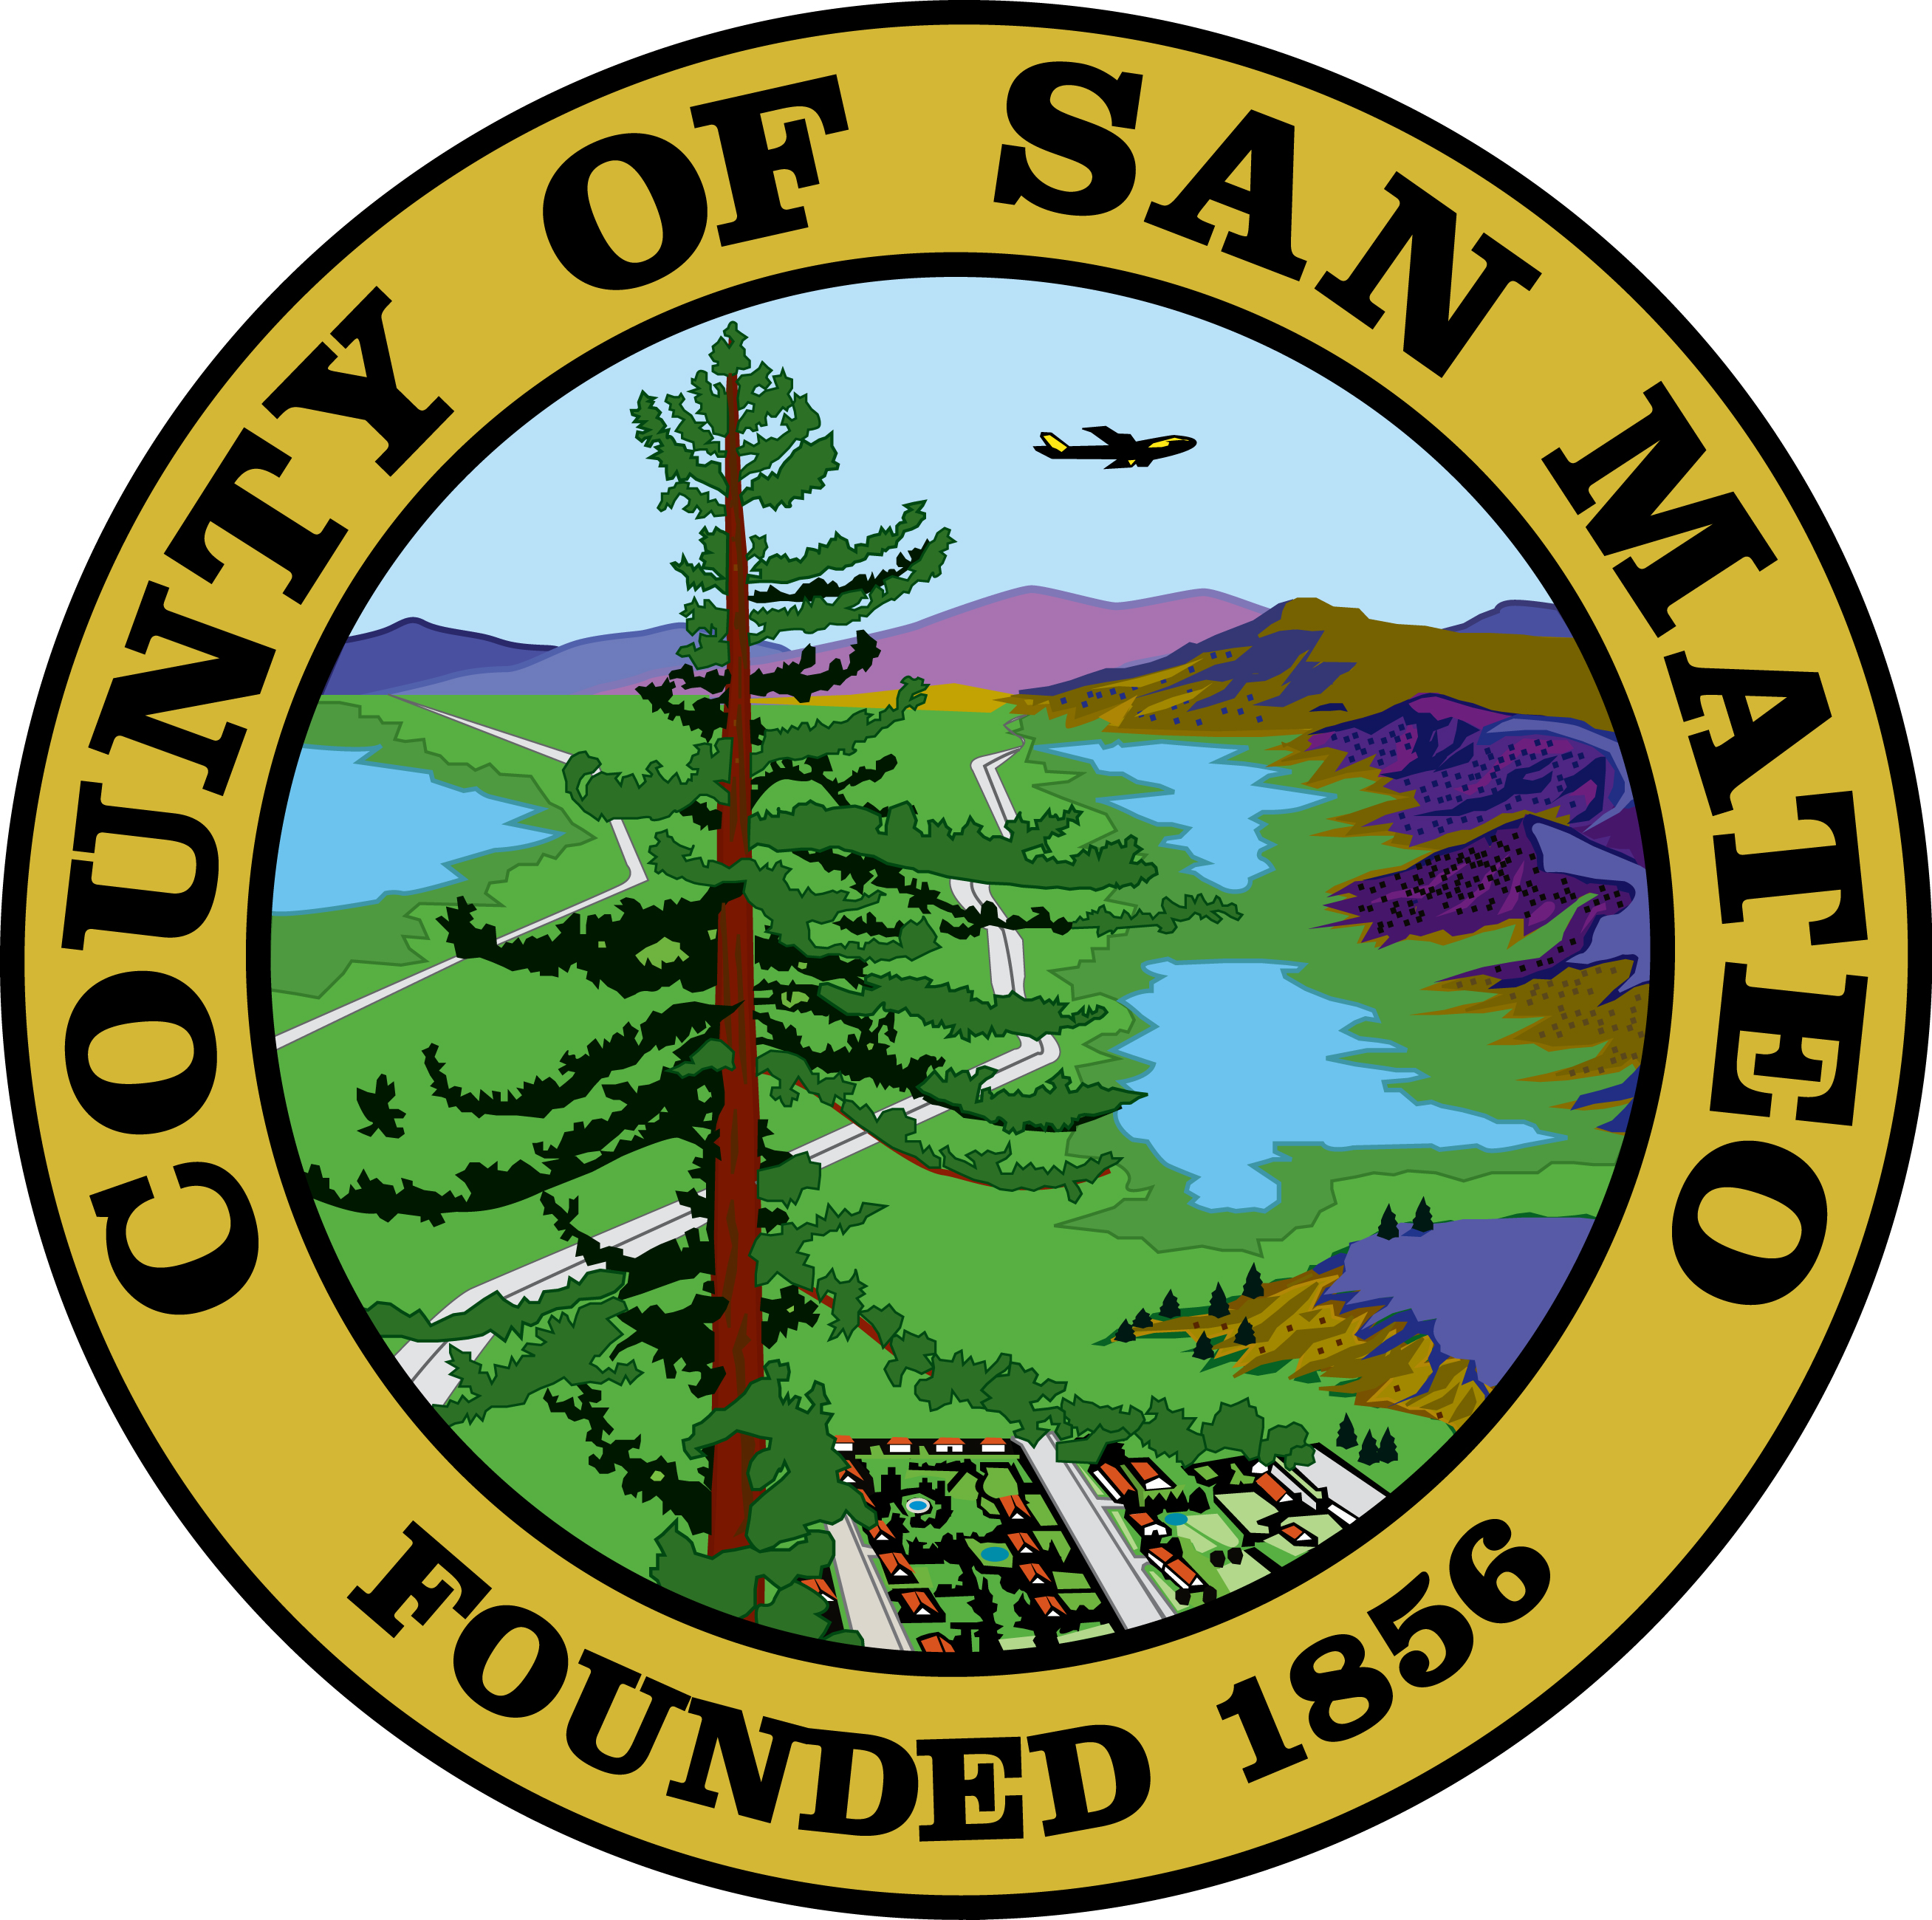 County of San Mateo Hires Human Trafficking Program Coordinator to